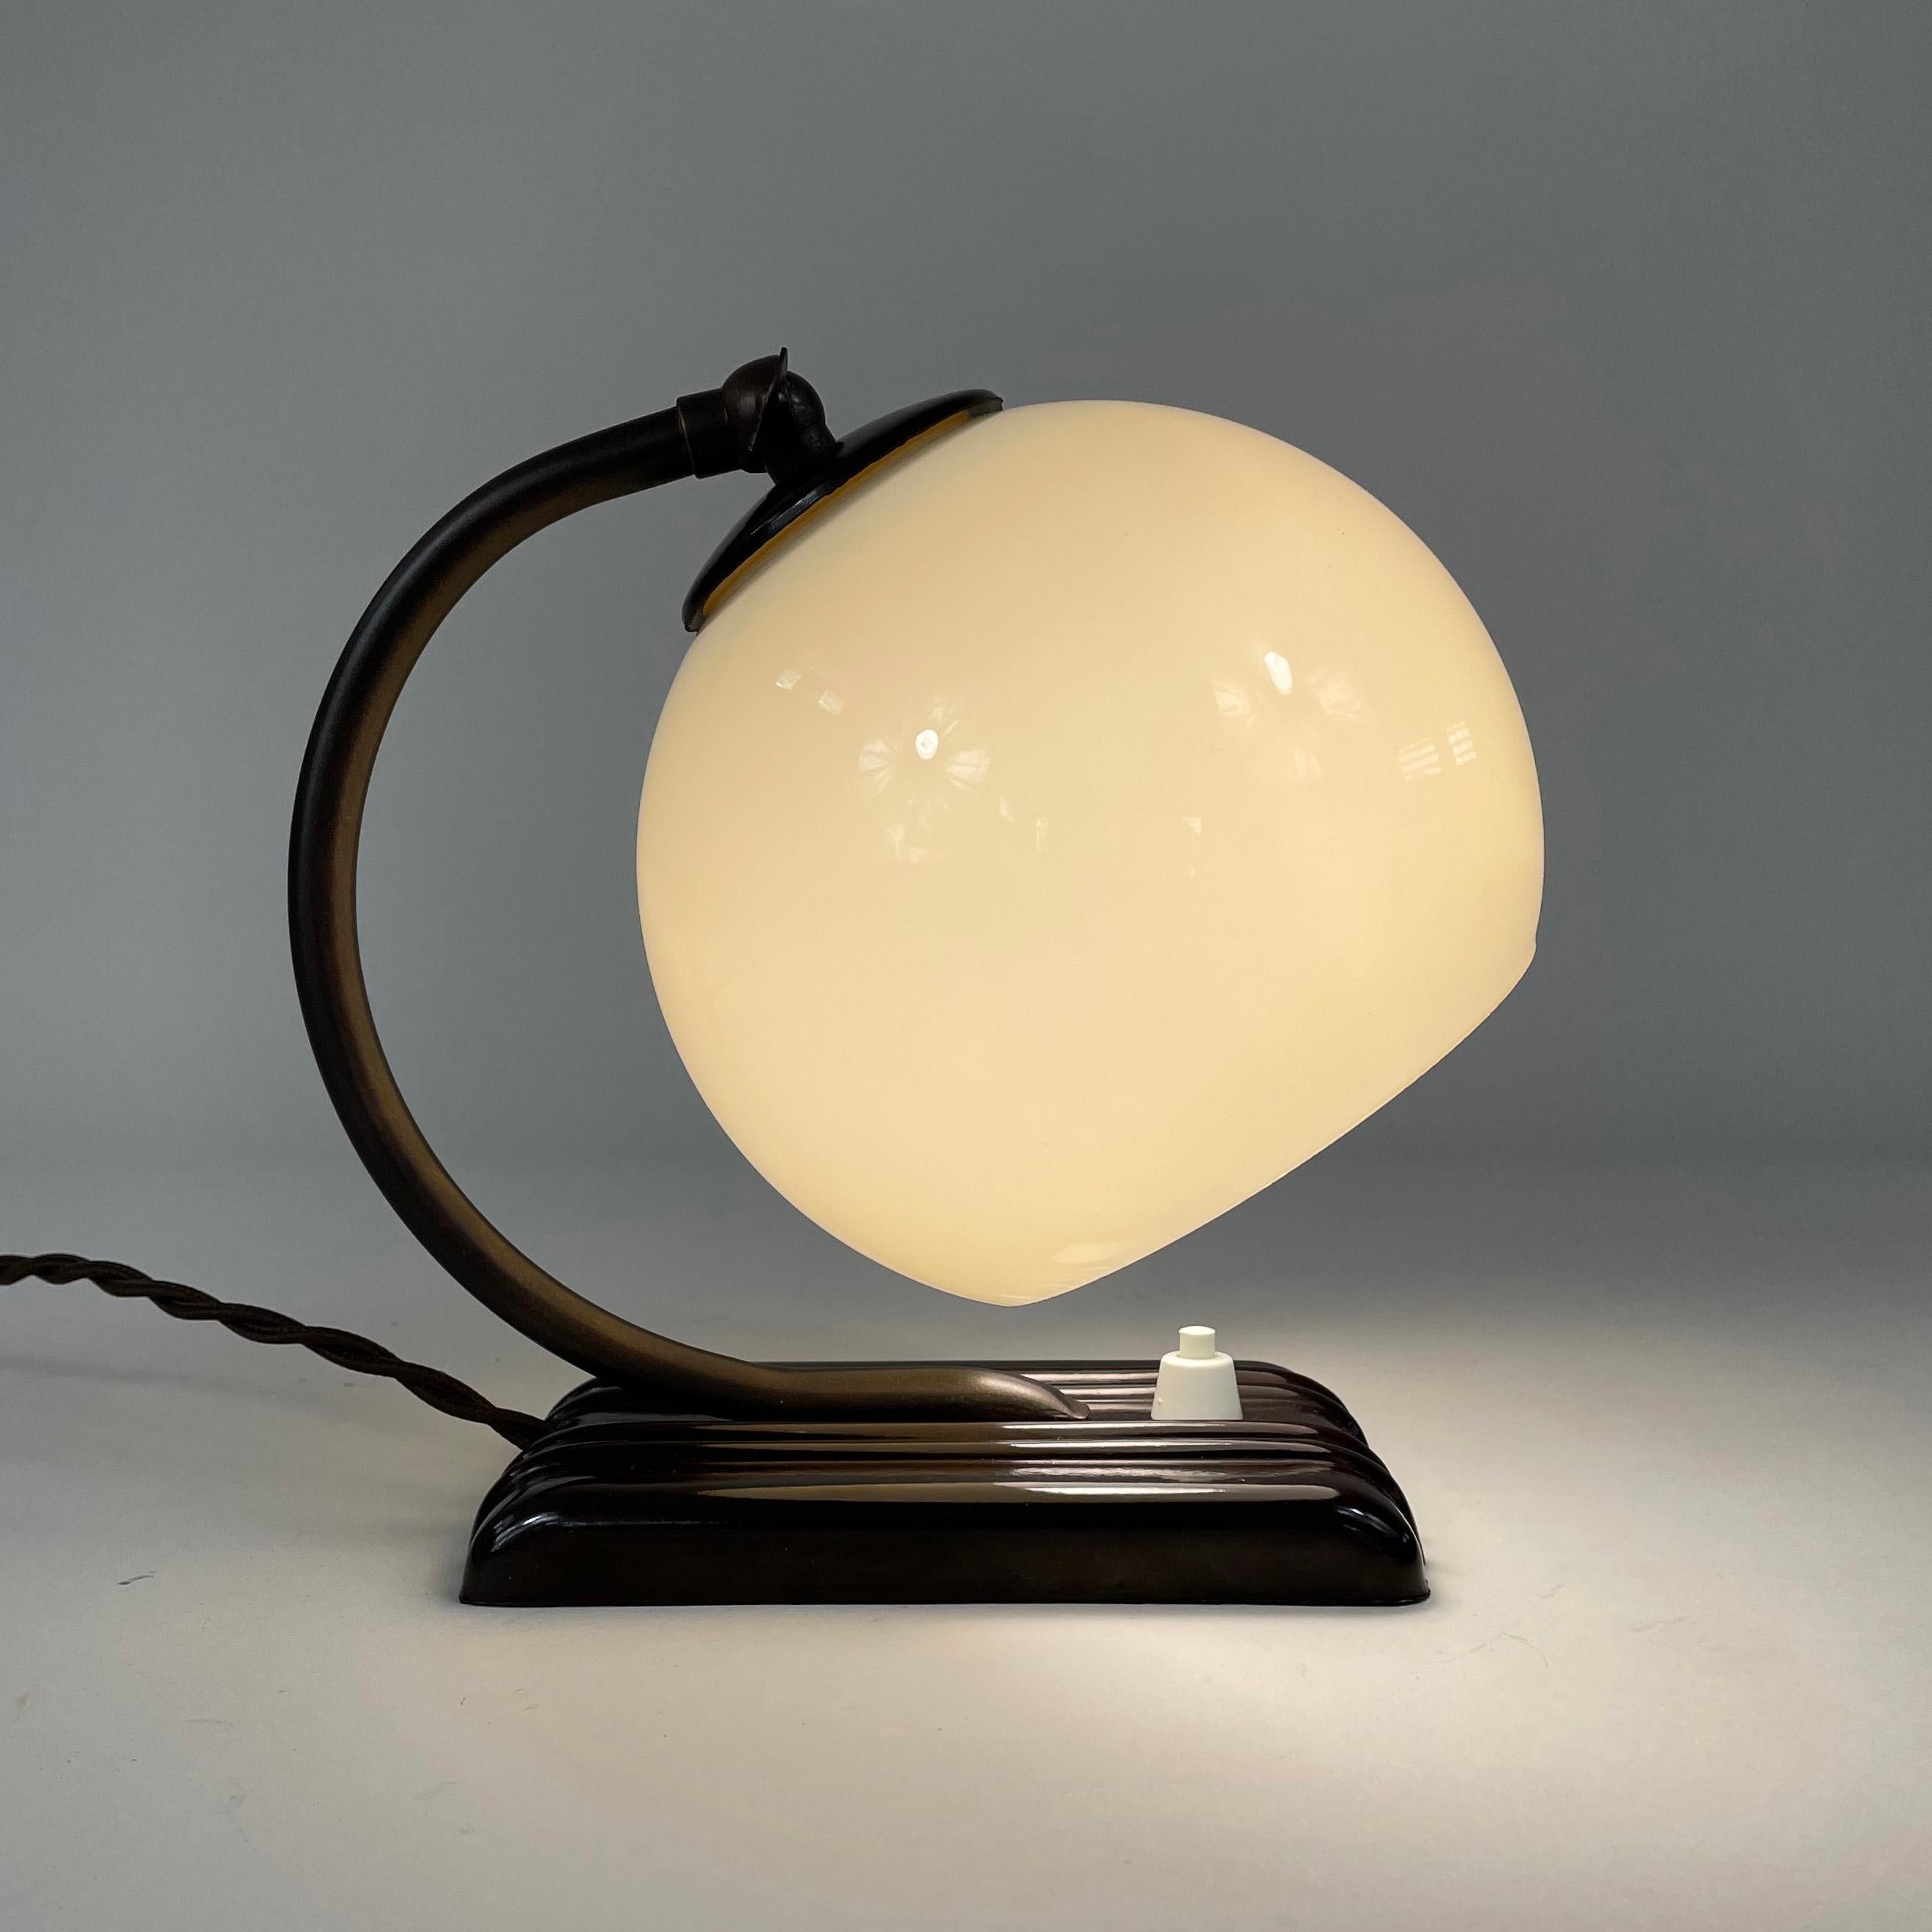 German Art Deco Streamline Design Bakelite and Opaline Table Lamp, 1920s to 1930s